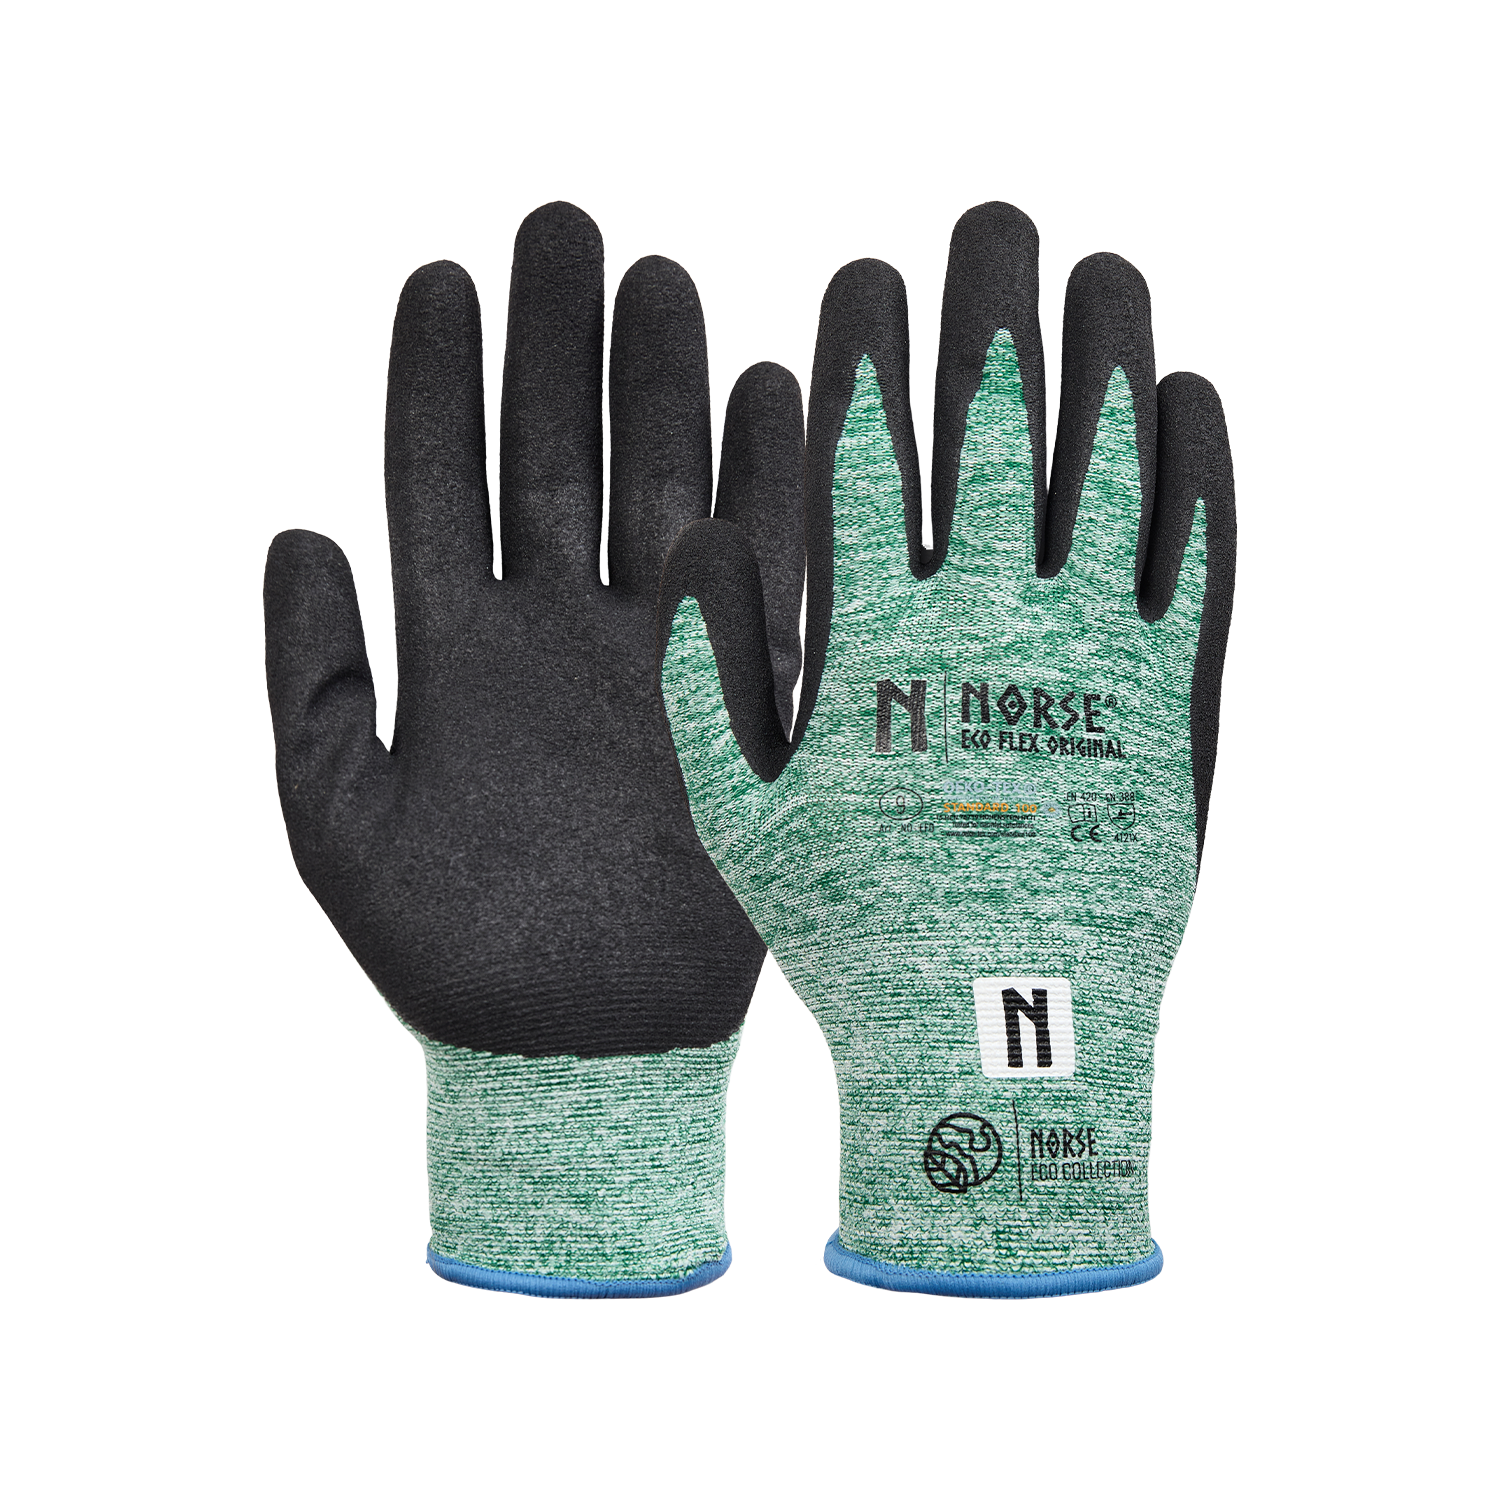 NORSE Eco Flex Original assembly gloves size 8